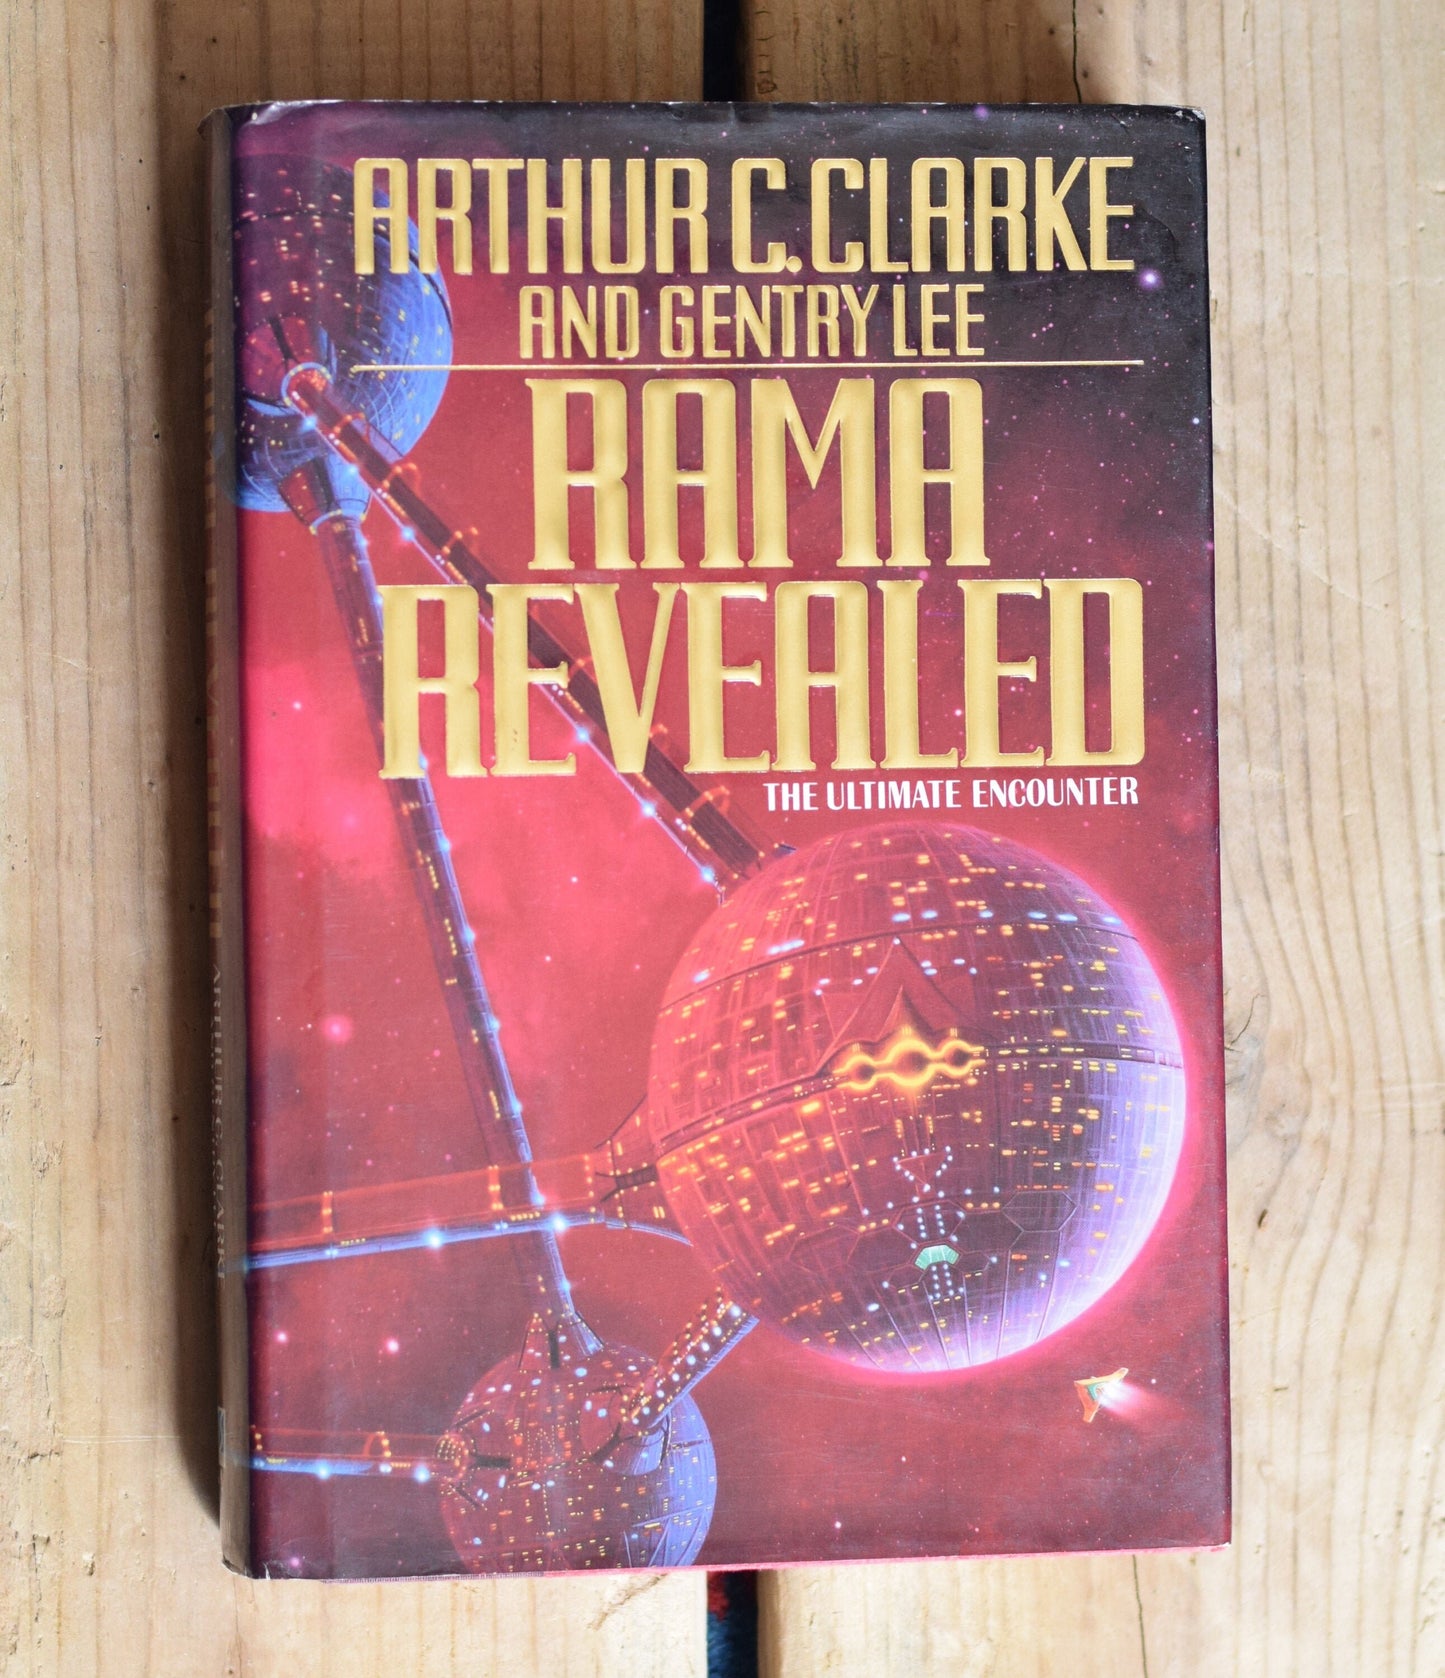 Vintage Sci-fi Hardback Novel: Arthur C Clarke and Gentry Lee - Rama Revealed FIRST EDITION